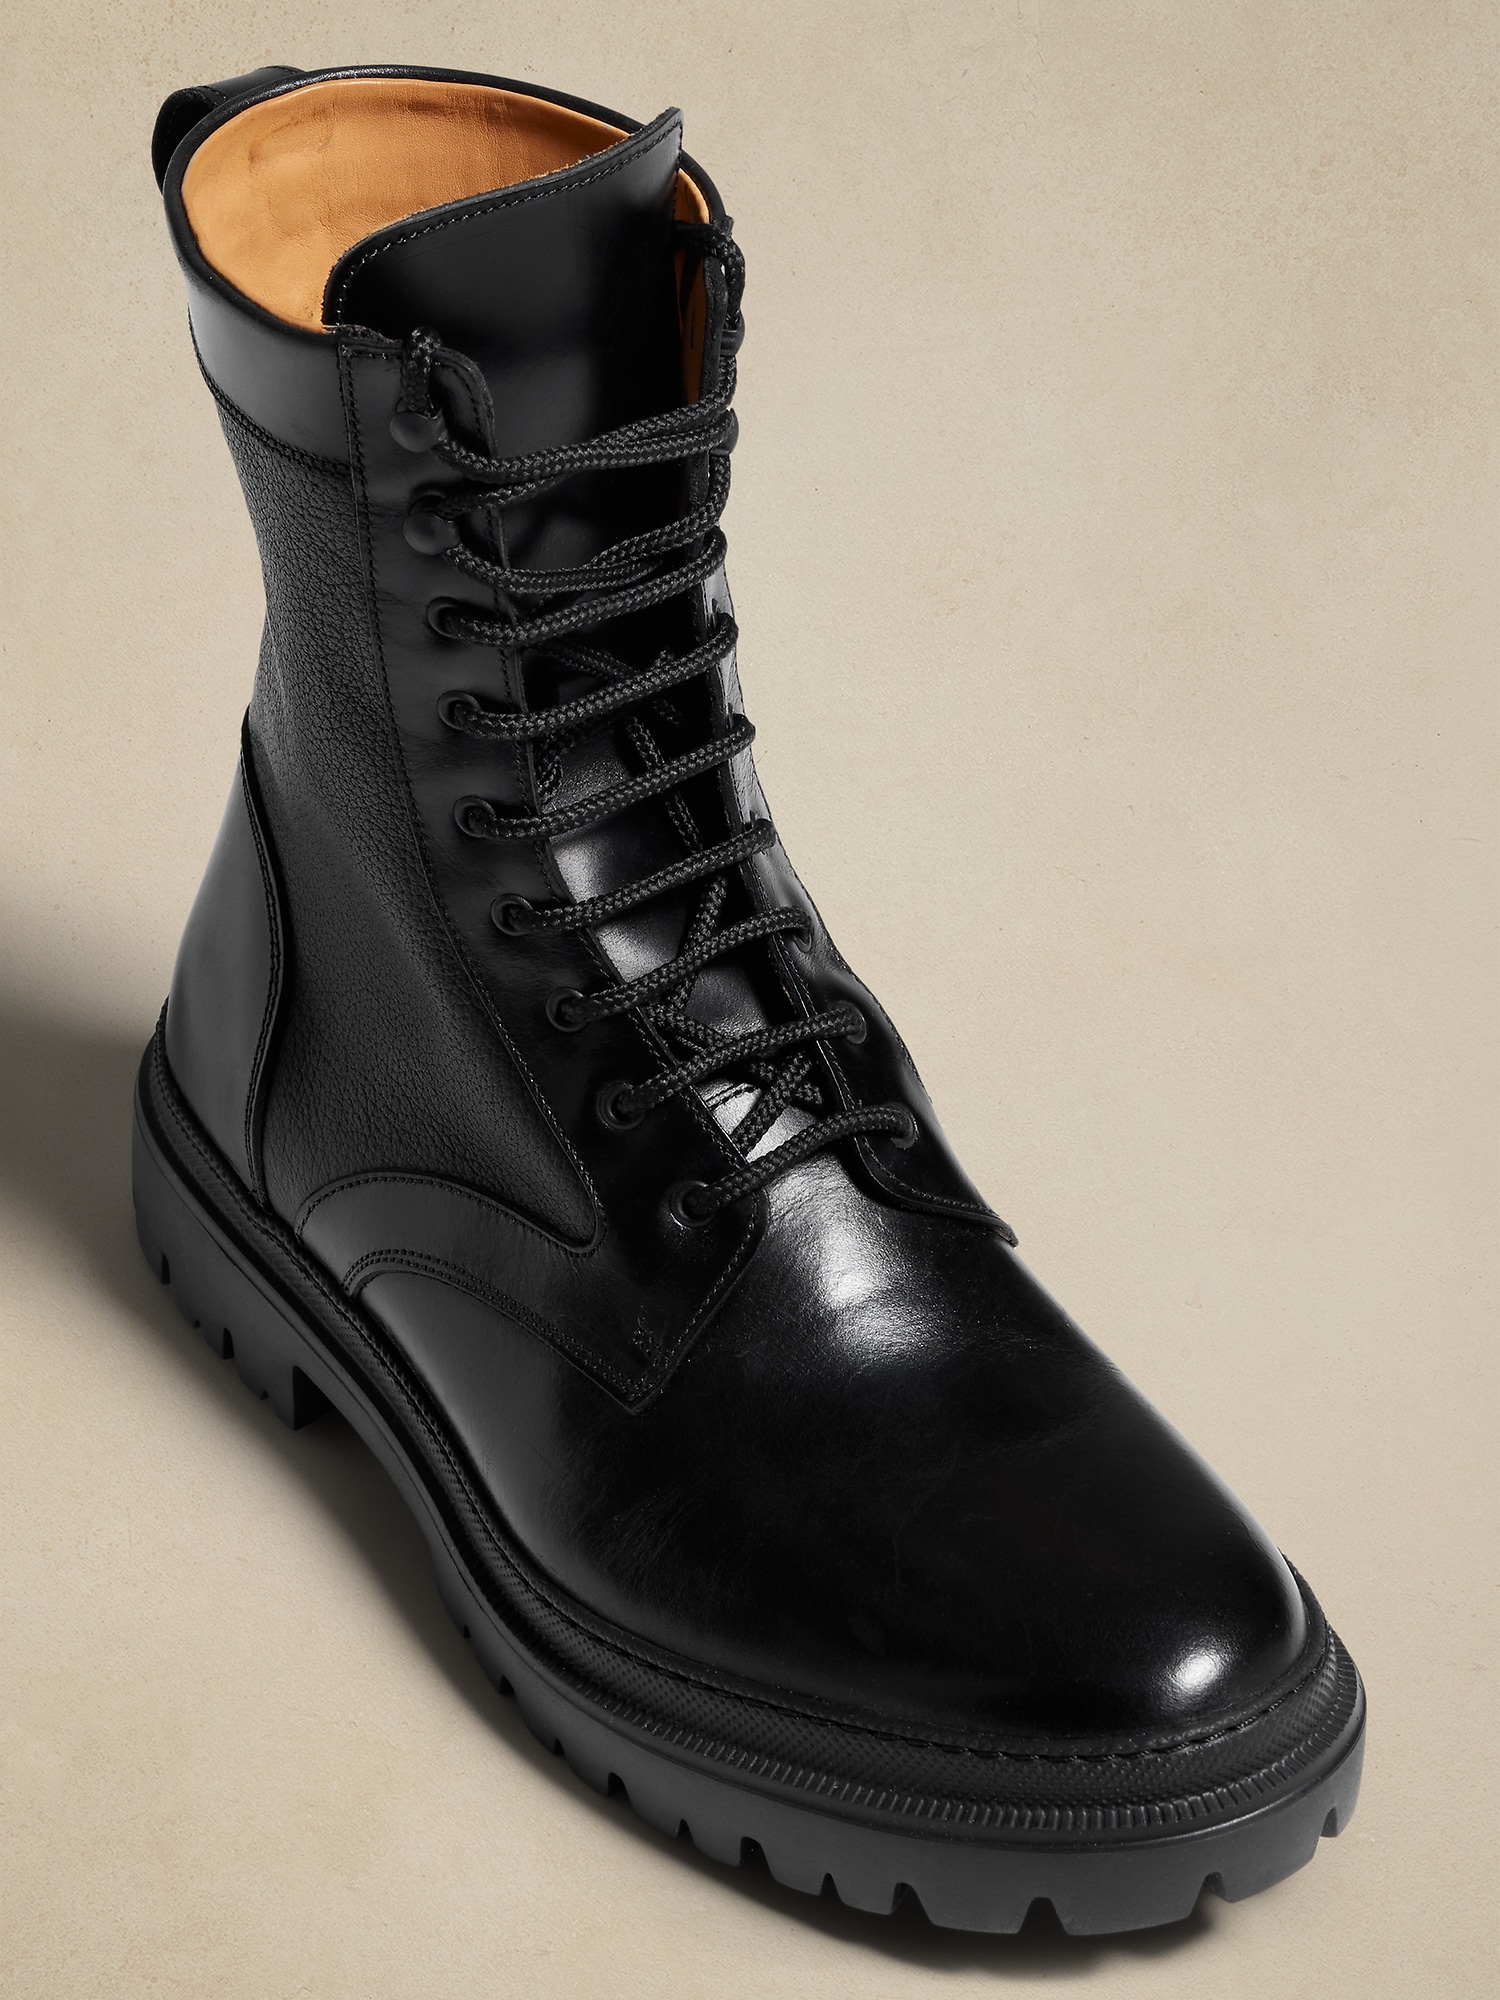 Banana Republic Men's Leo Leather Lace-Up Boot Black Size 8